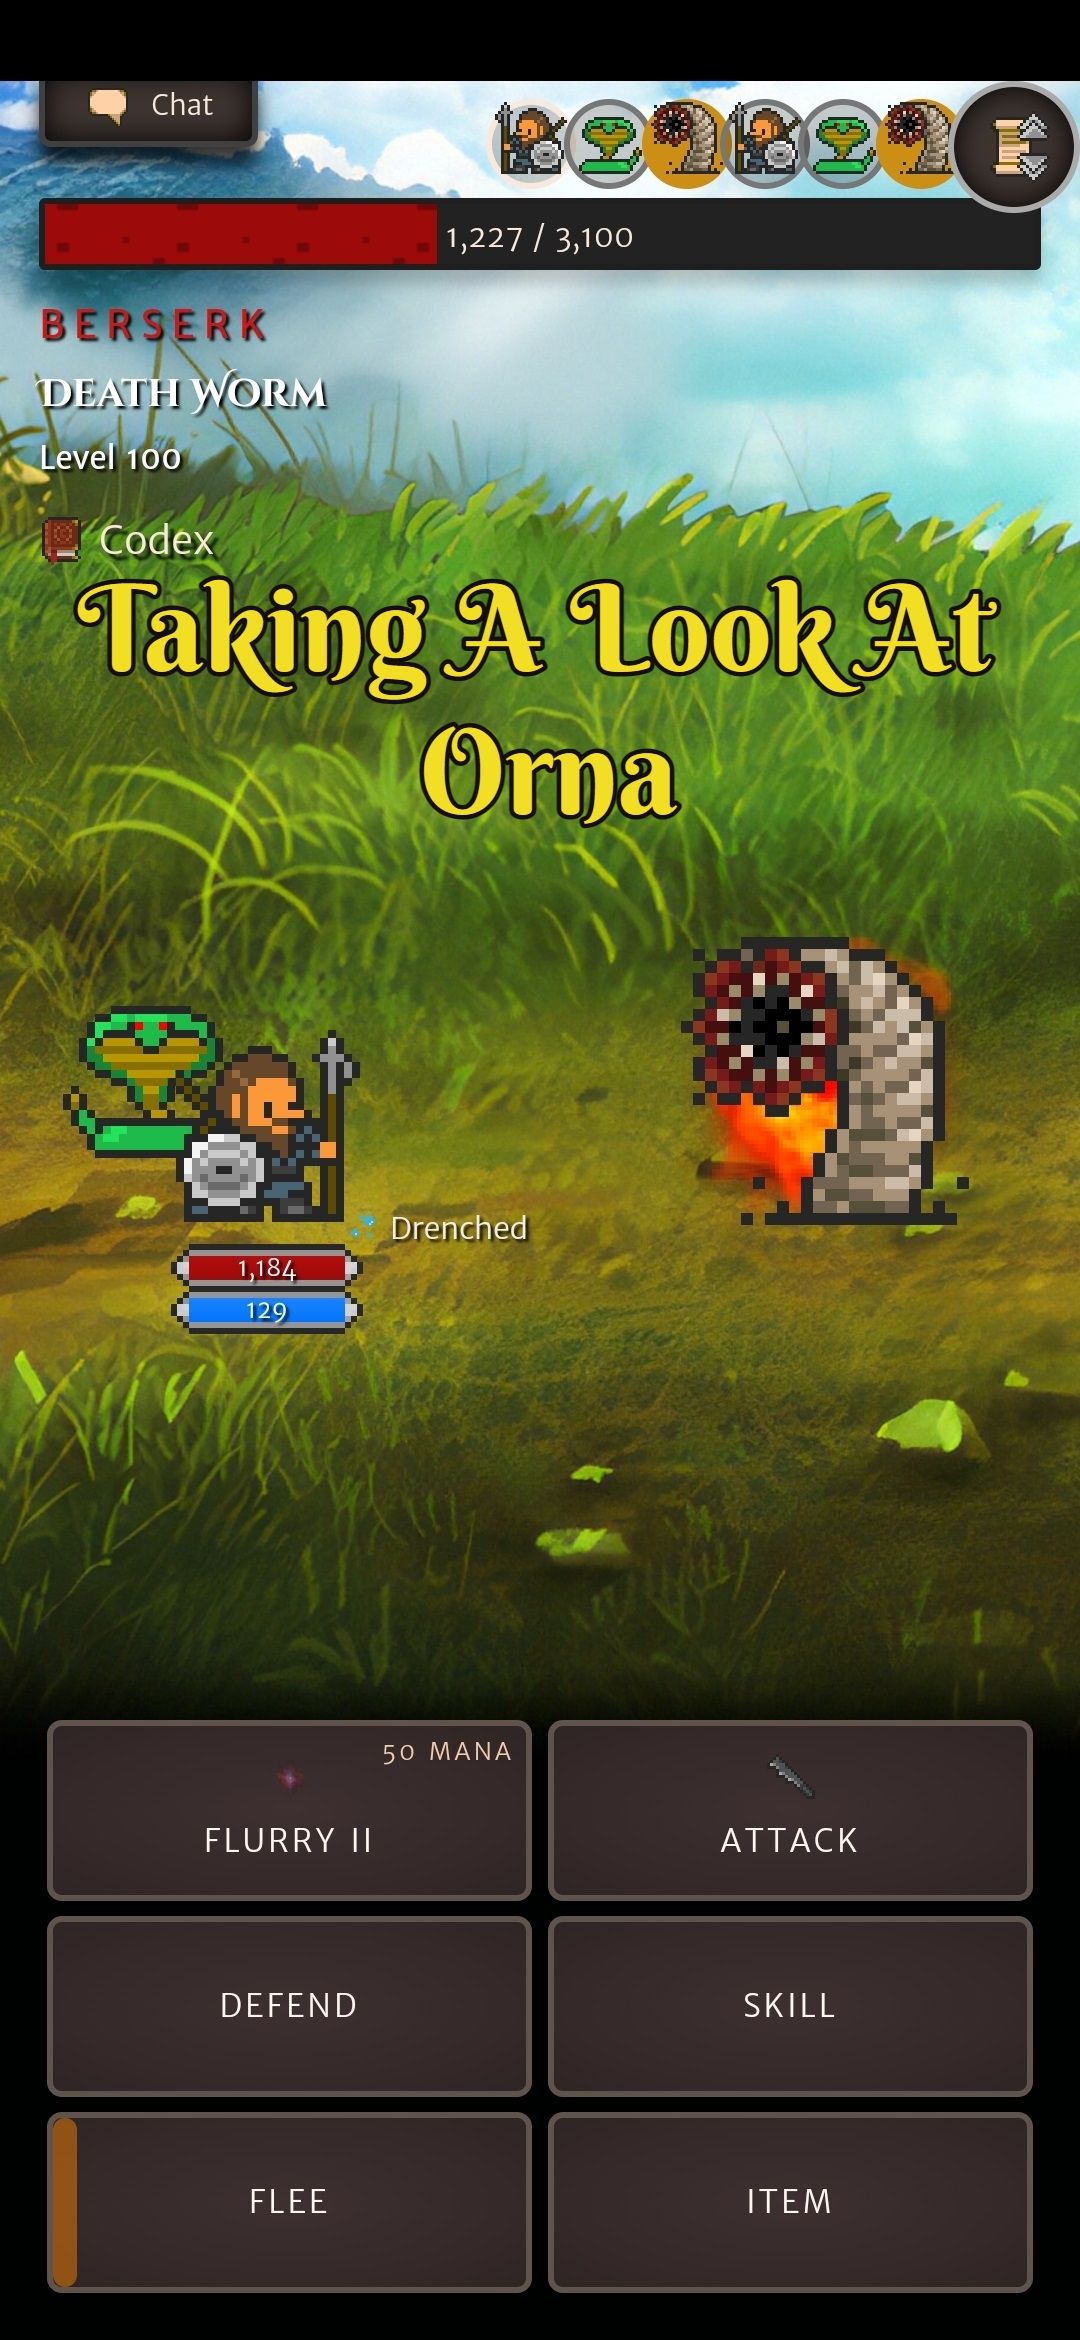 fighting a death worm in ORNA.jpg